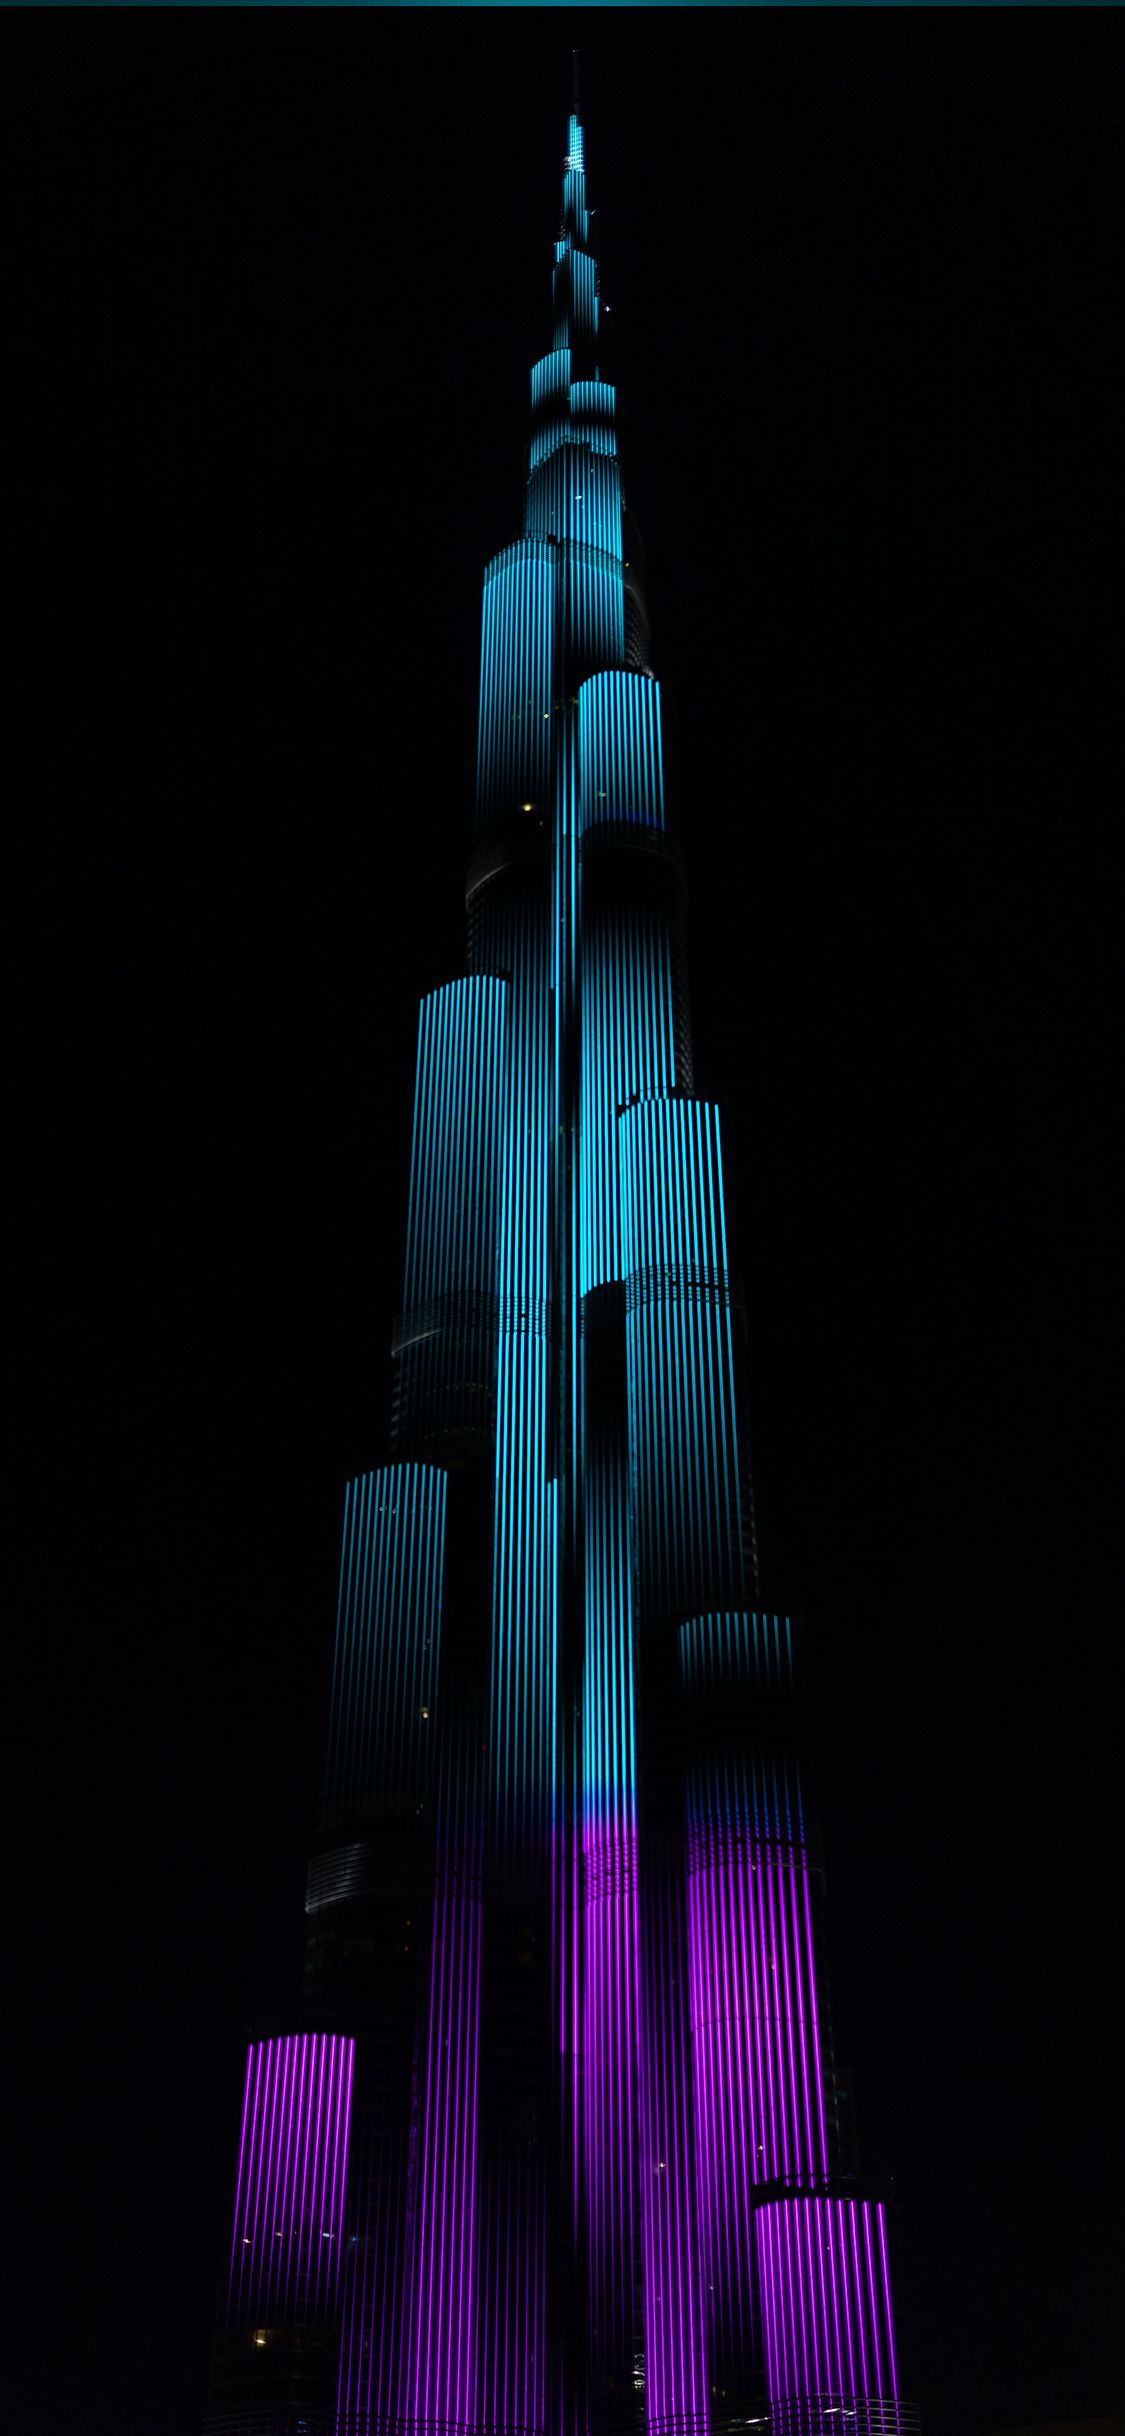 impresionantes fondos de pantalla para iphone 5,azul,oscuridad,ligero,arquitectura,rascacielos